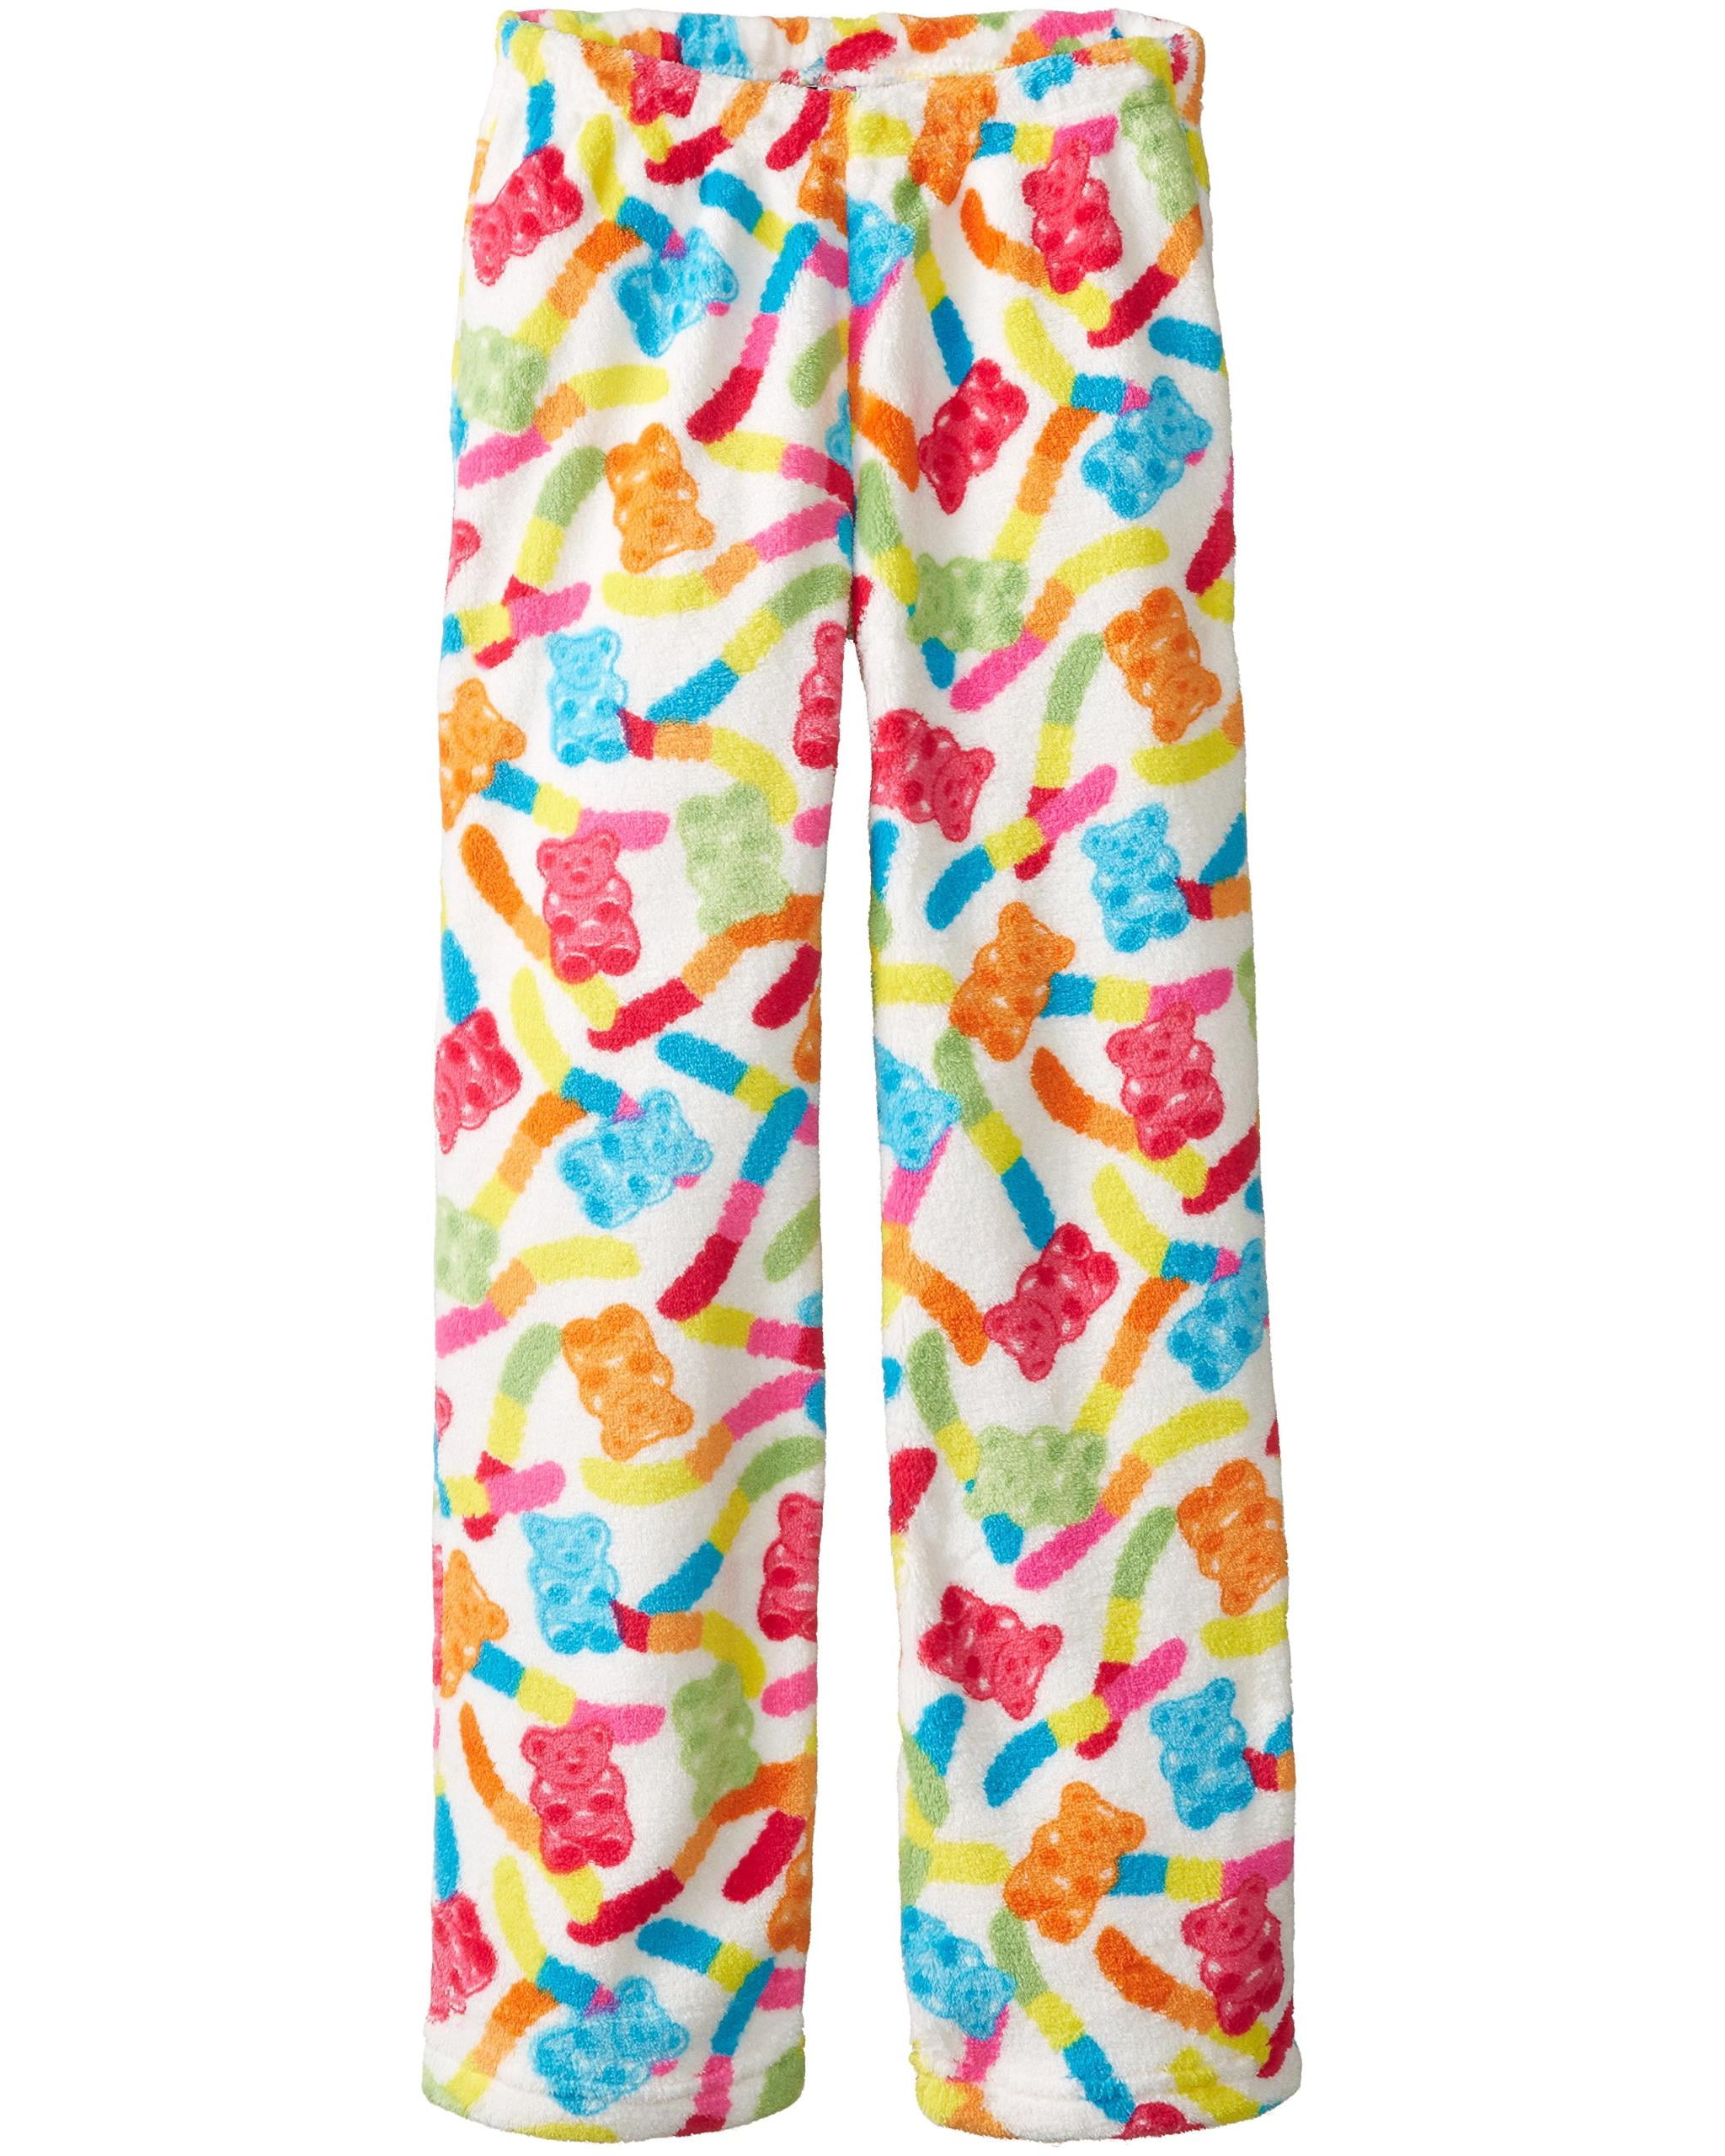 Up Past 8 - Up Past 8 Girls Pajama Pants Plush Sleepwear Fun Print ...